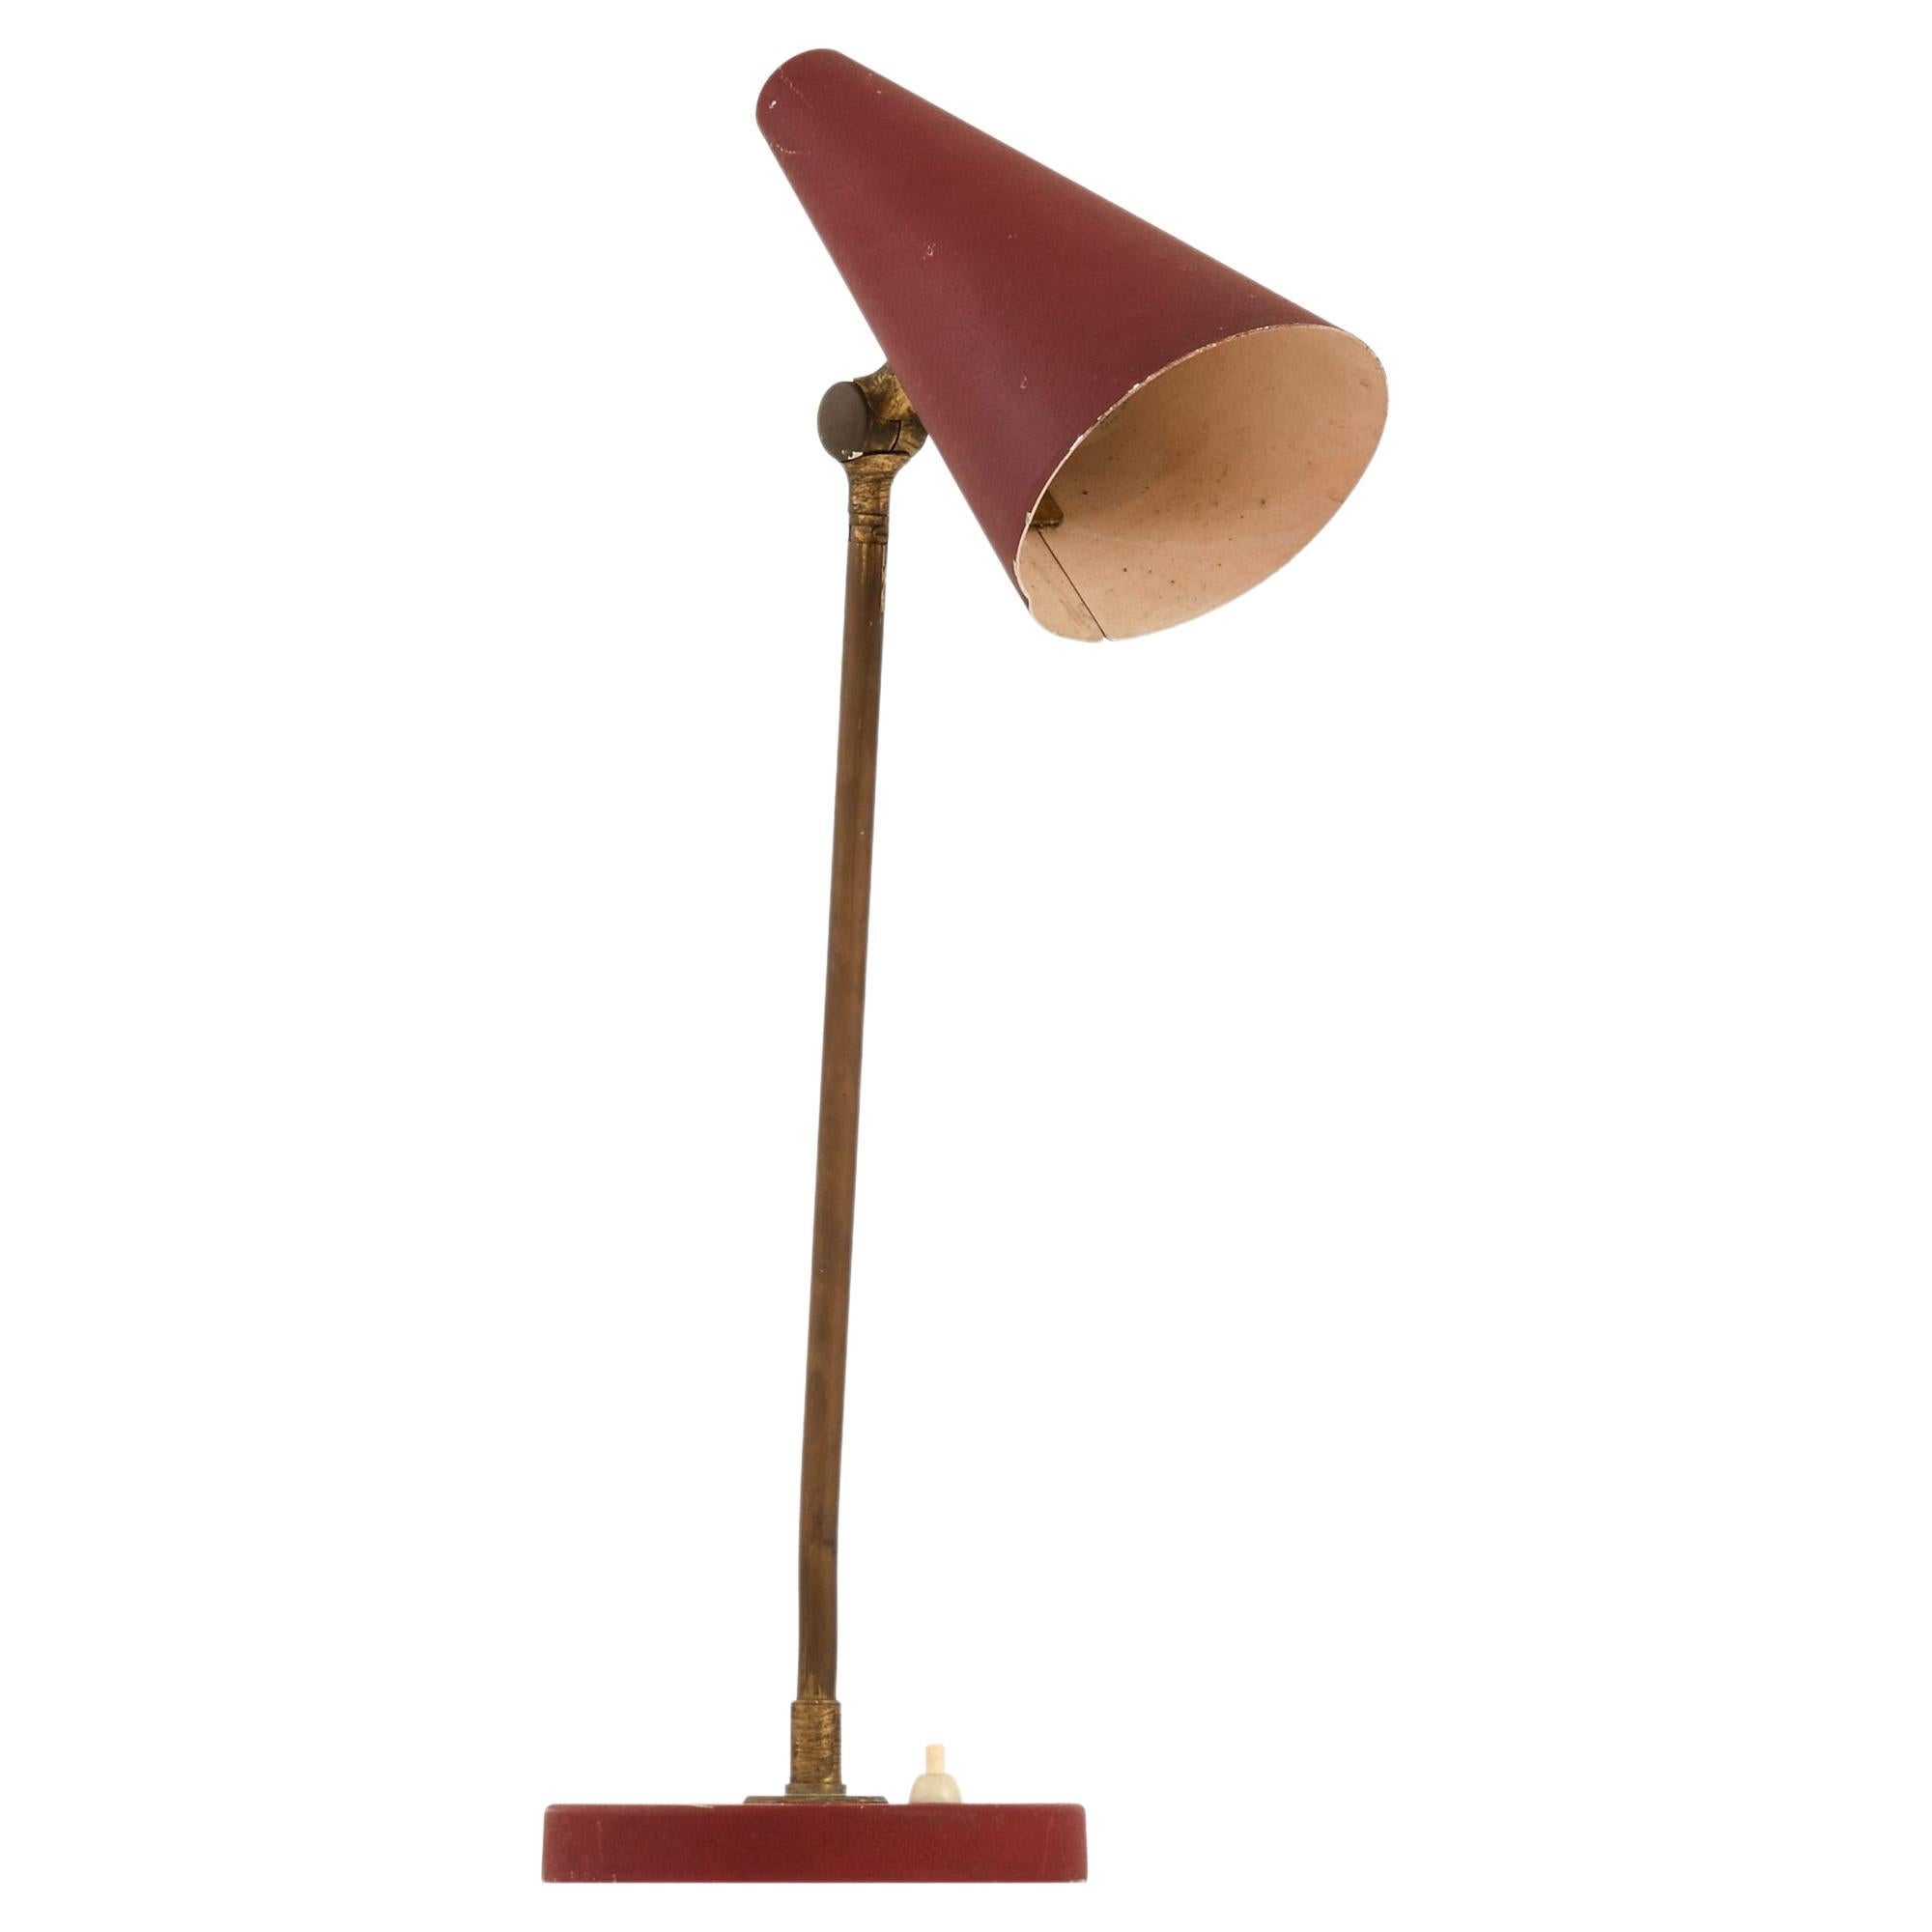 Bertil Brisborg Table Lamp in Brass and Red Lacquer, 1950’s Nordiska Kompaniet For Sale